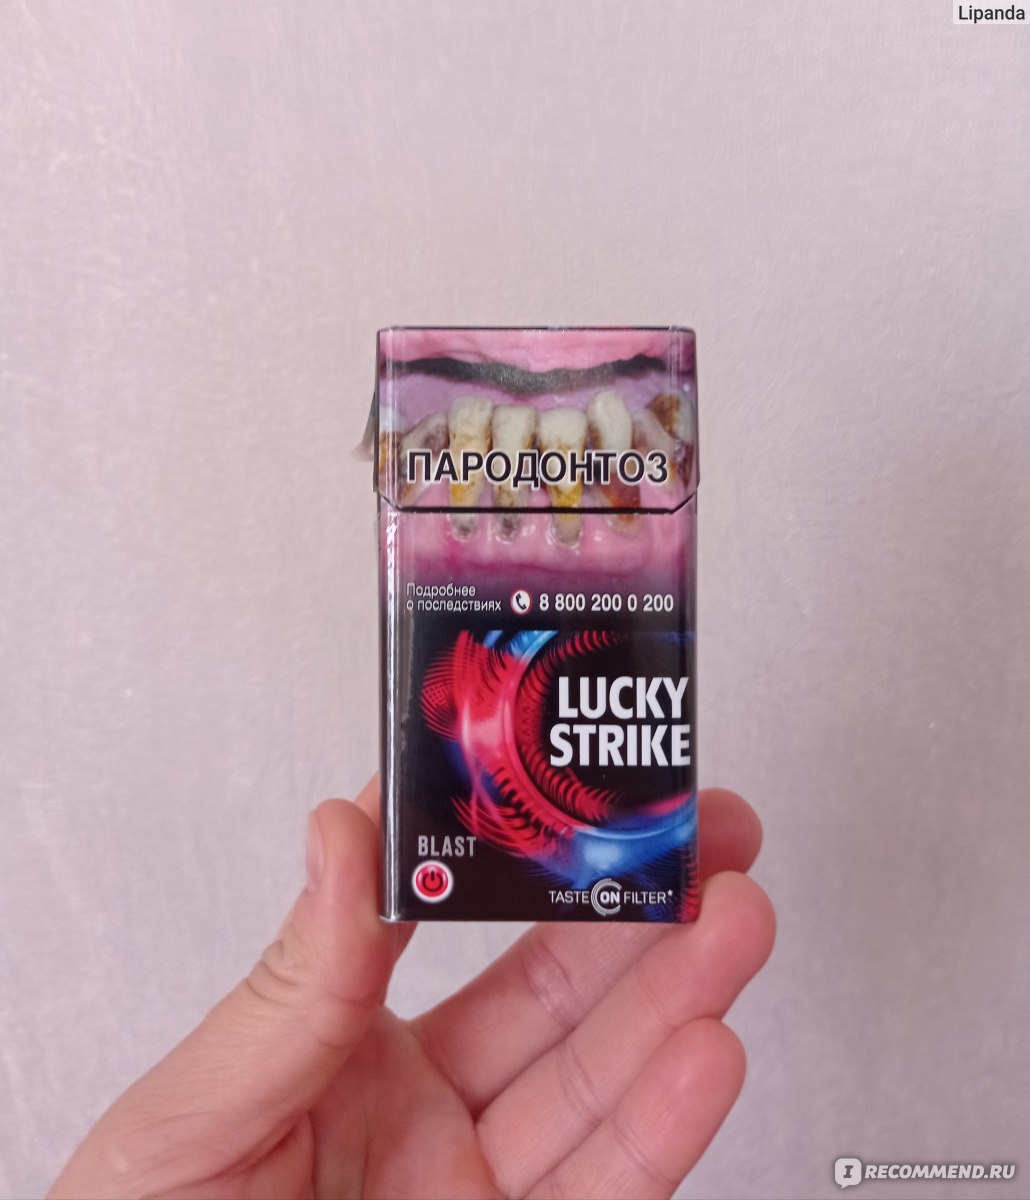 Лайки страйки компакт. Лаки страйк компакт Бласт. Lucky Strike XL Purple сигареты. Сигареты Lucky Strike Compact. Сигареты лаки страйк компакт Бласт.